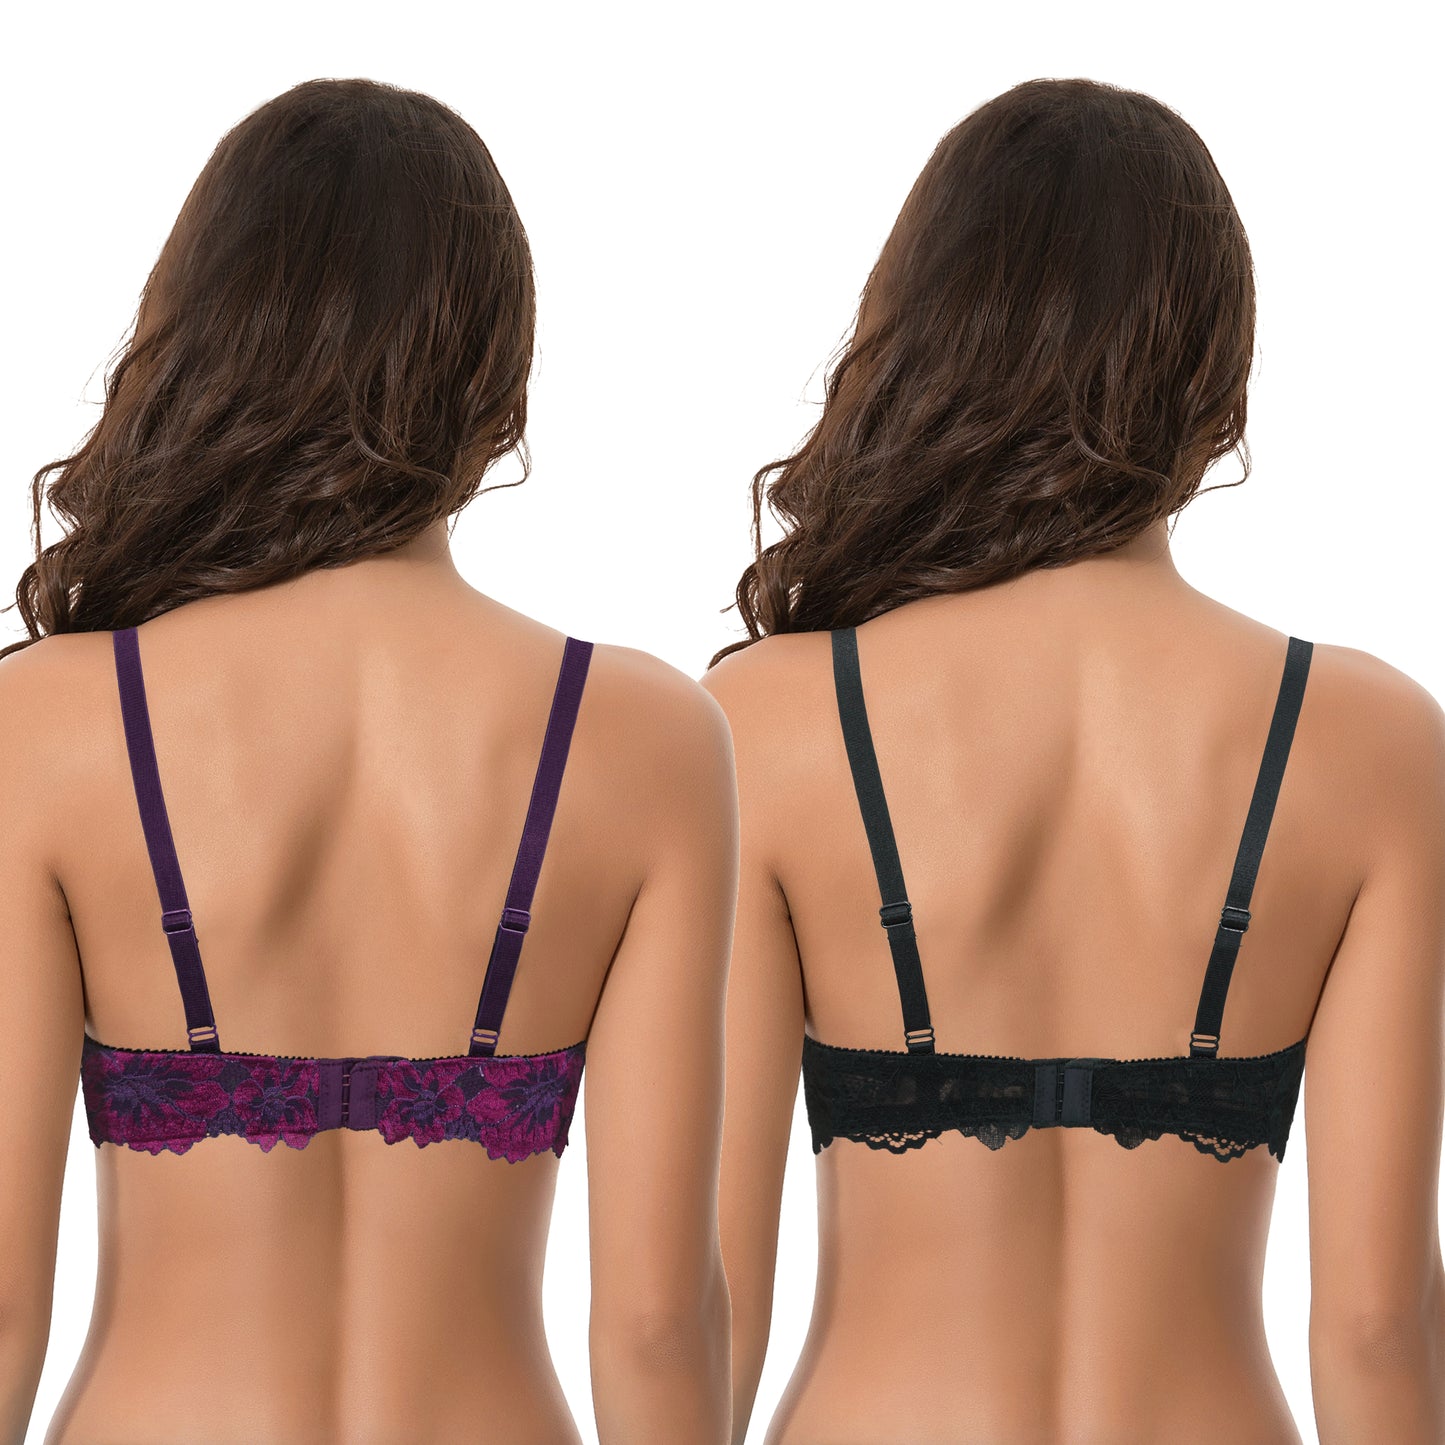 Women's Plus Size Push Up Add 1 Cup Underwire Perfect Shape Lace Bras-2Pk-Black,Fuchsia